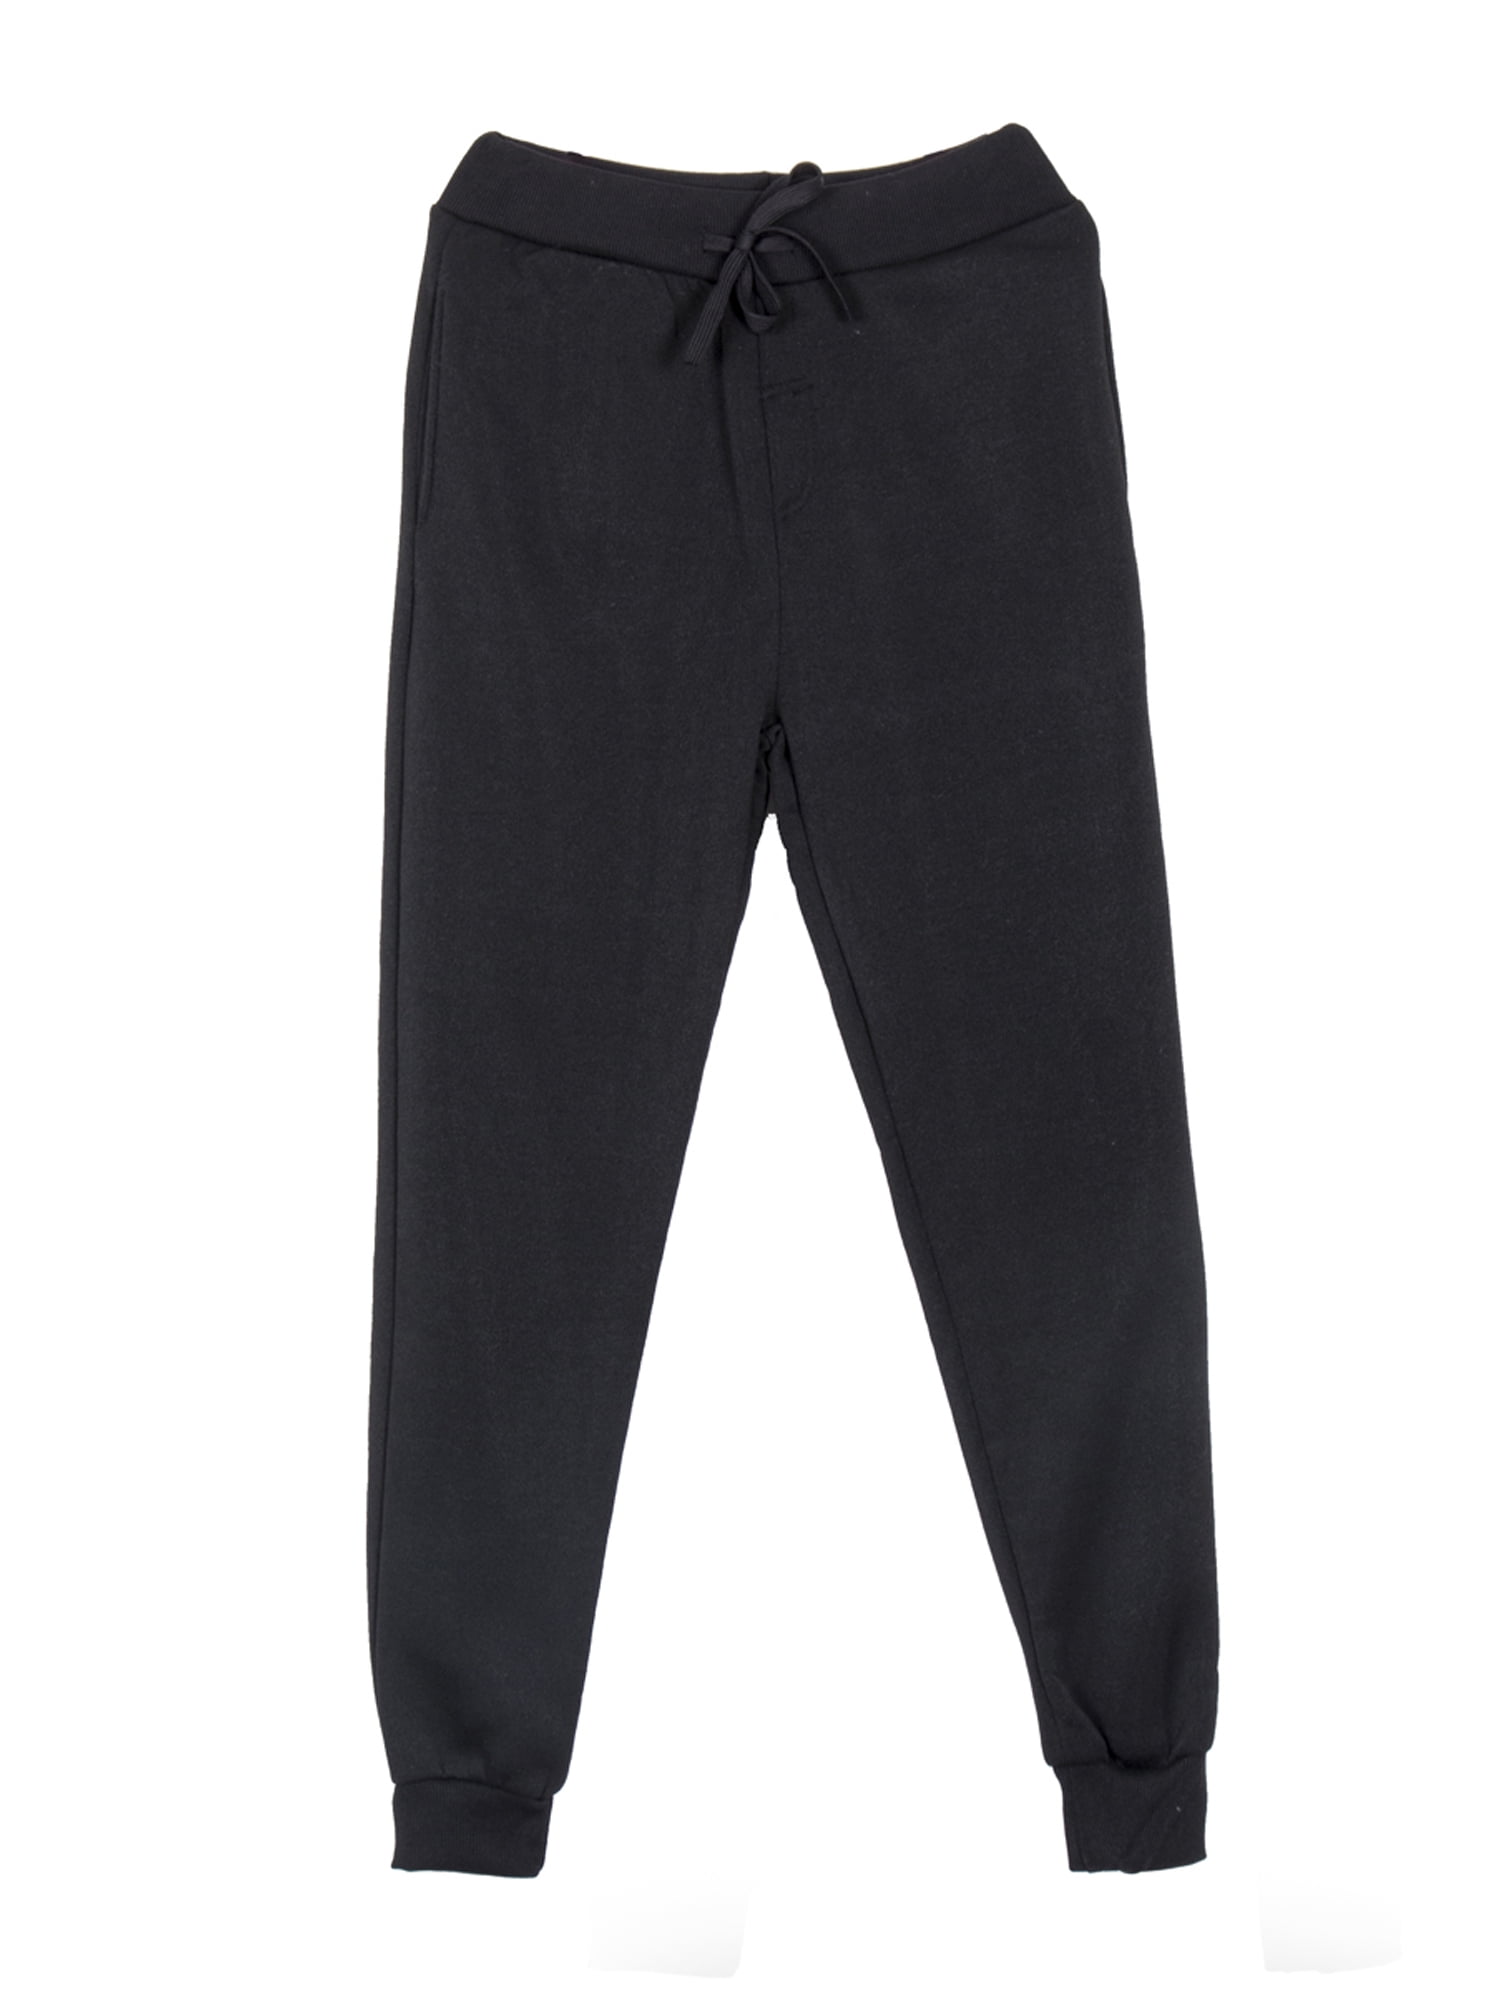 Woshilaocai Mens Grey/Black/Navy Fleece Joggers Pants Trousers Jogging Bottoms